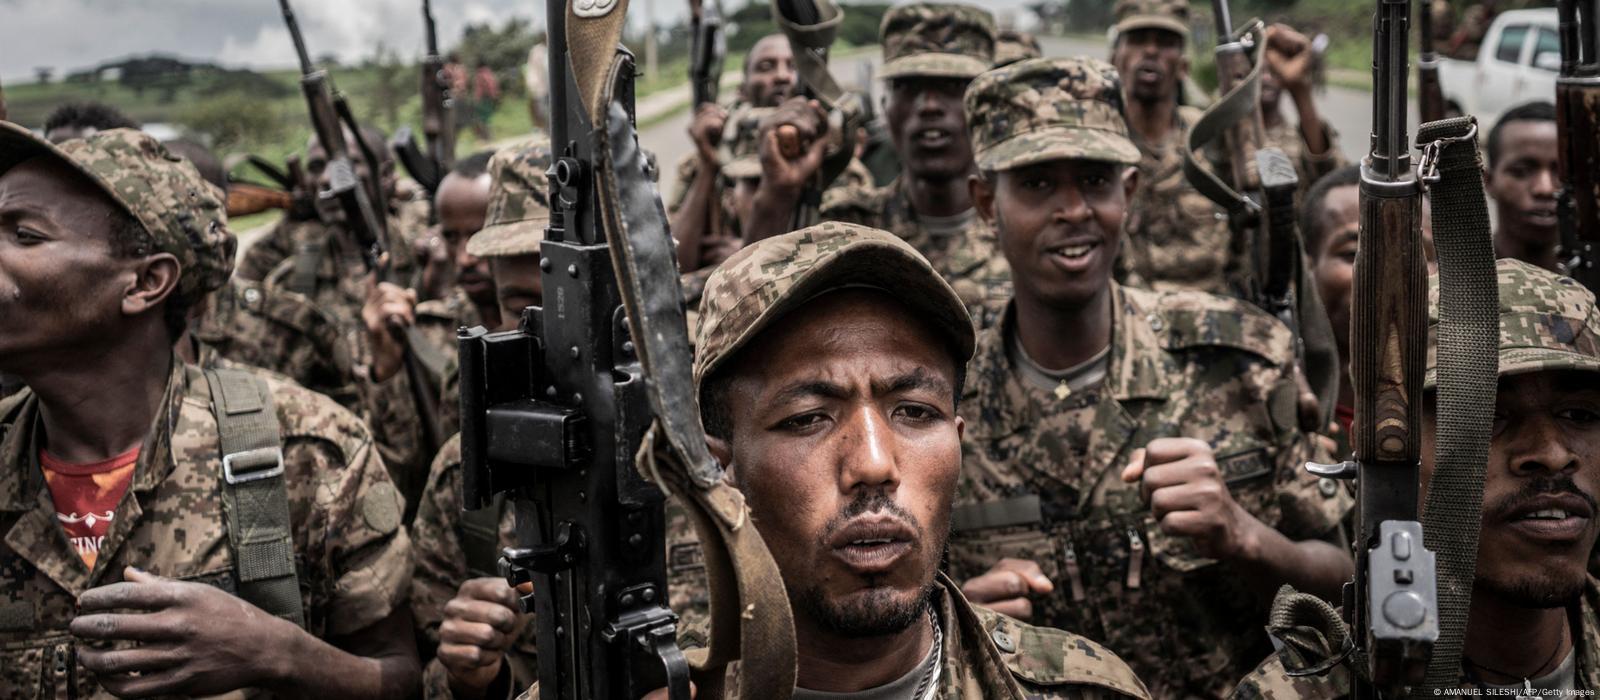 Ethiopia's War and Conflicts in Sudan, South Sudan, and Somalia